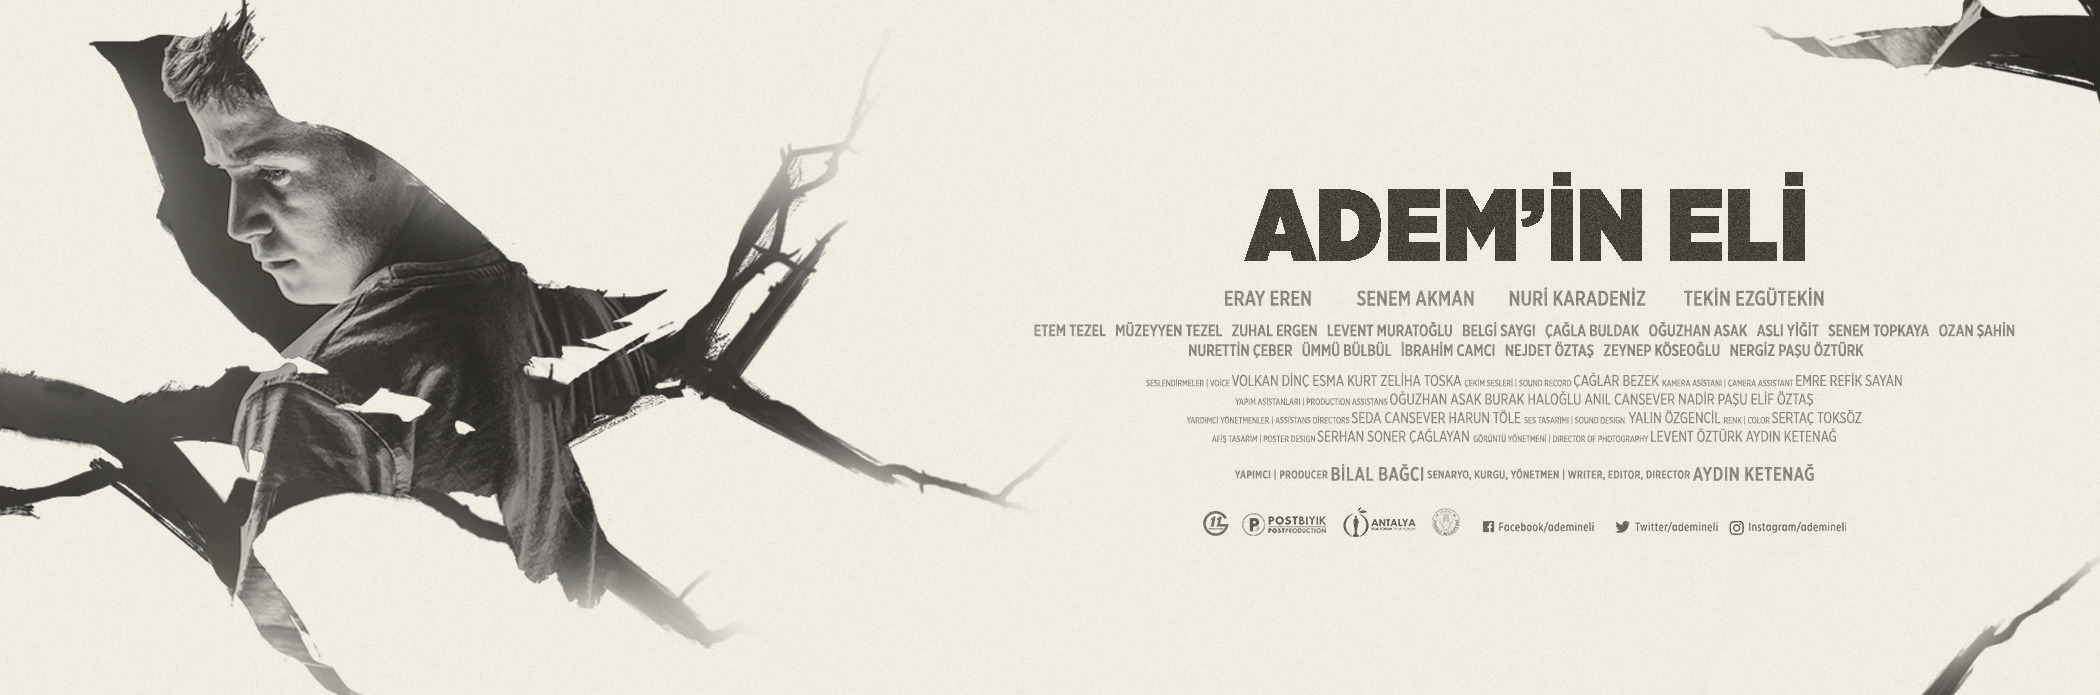 Mega Sized Movie Poster Image for Adem'in Eli (#3 of 3)